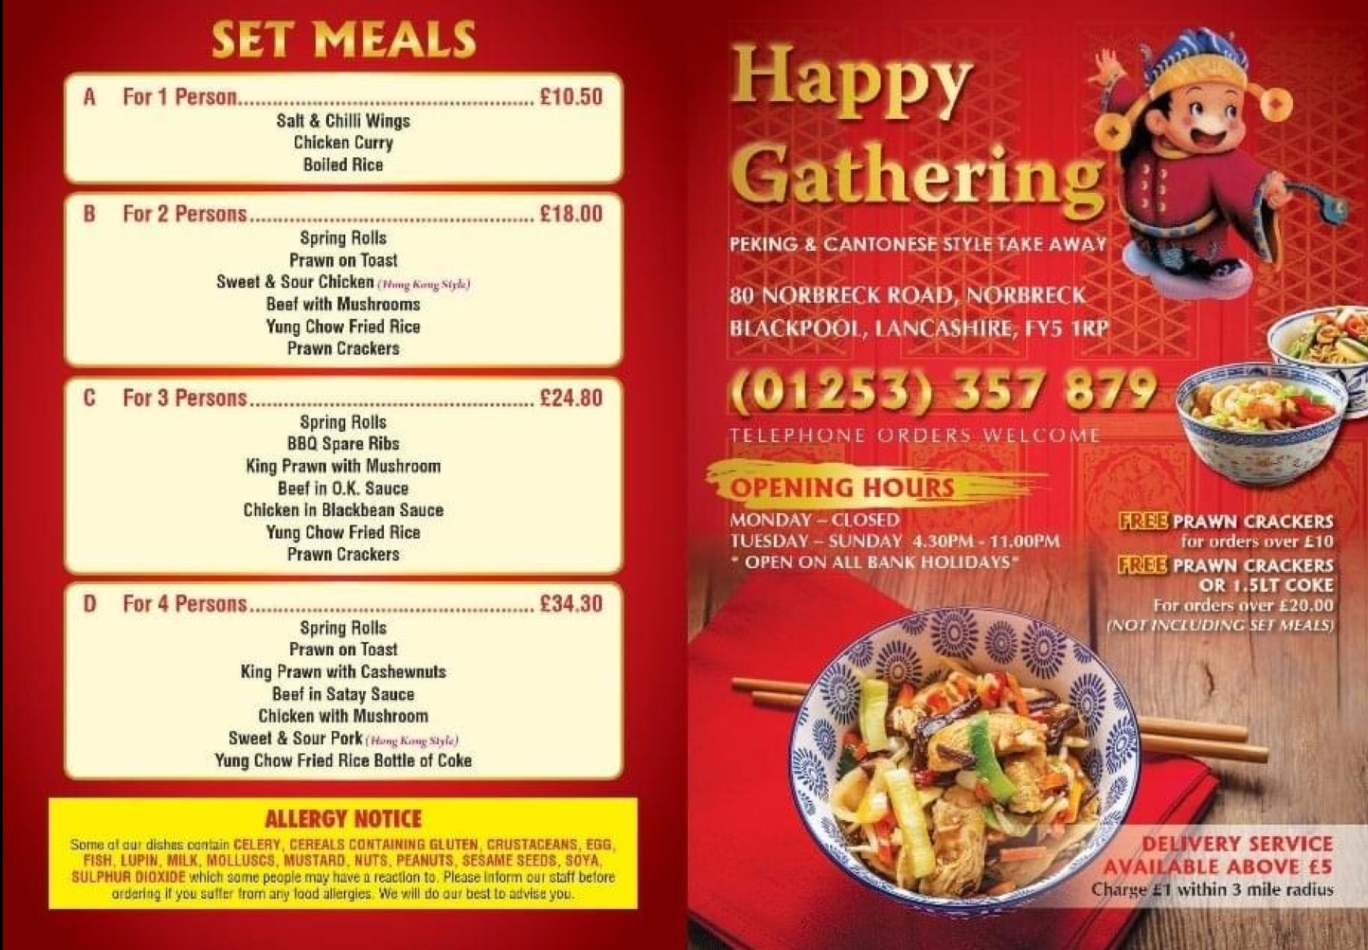 Takeaway Restaurant Menu Page - Happy Gathering Peking and Cantonese Take away - Thornton-Cleveleys